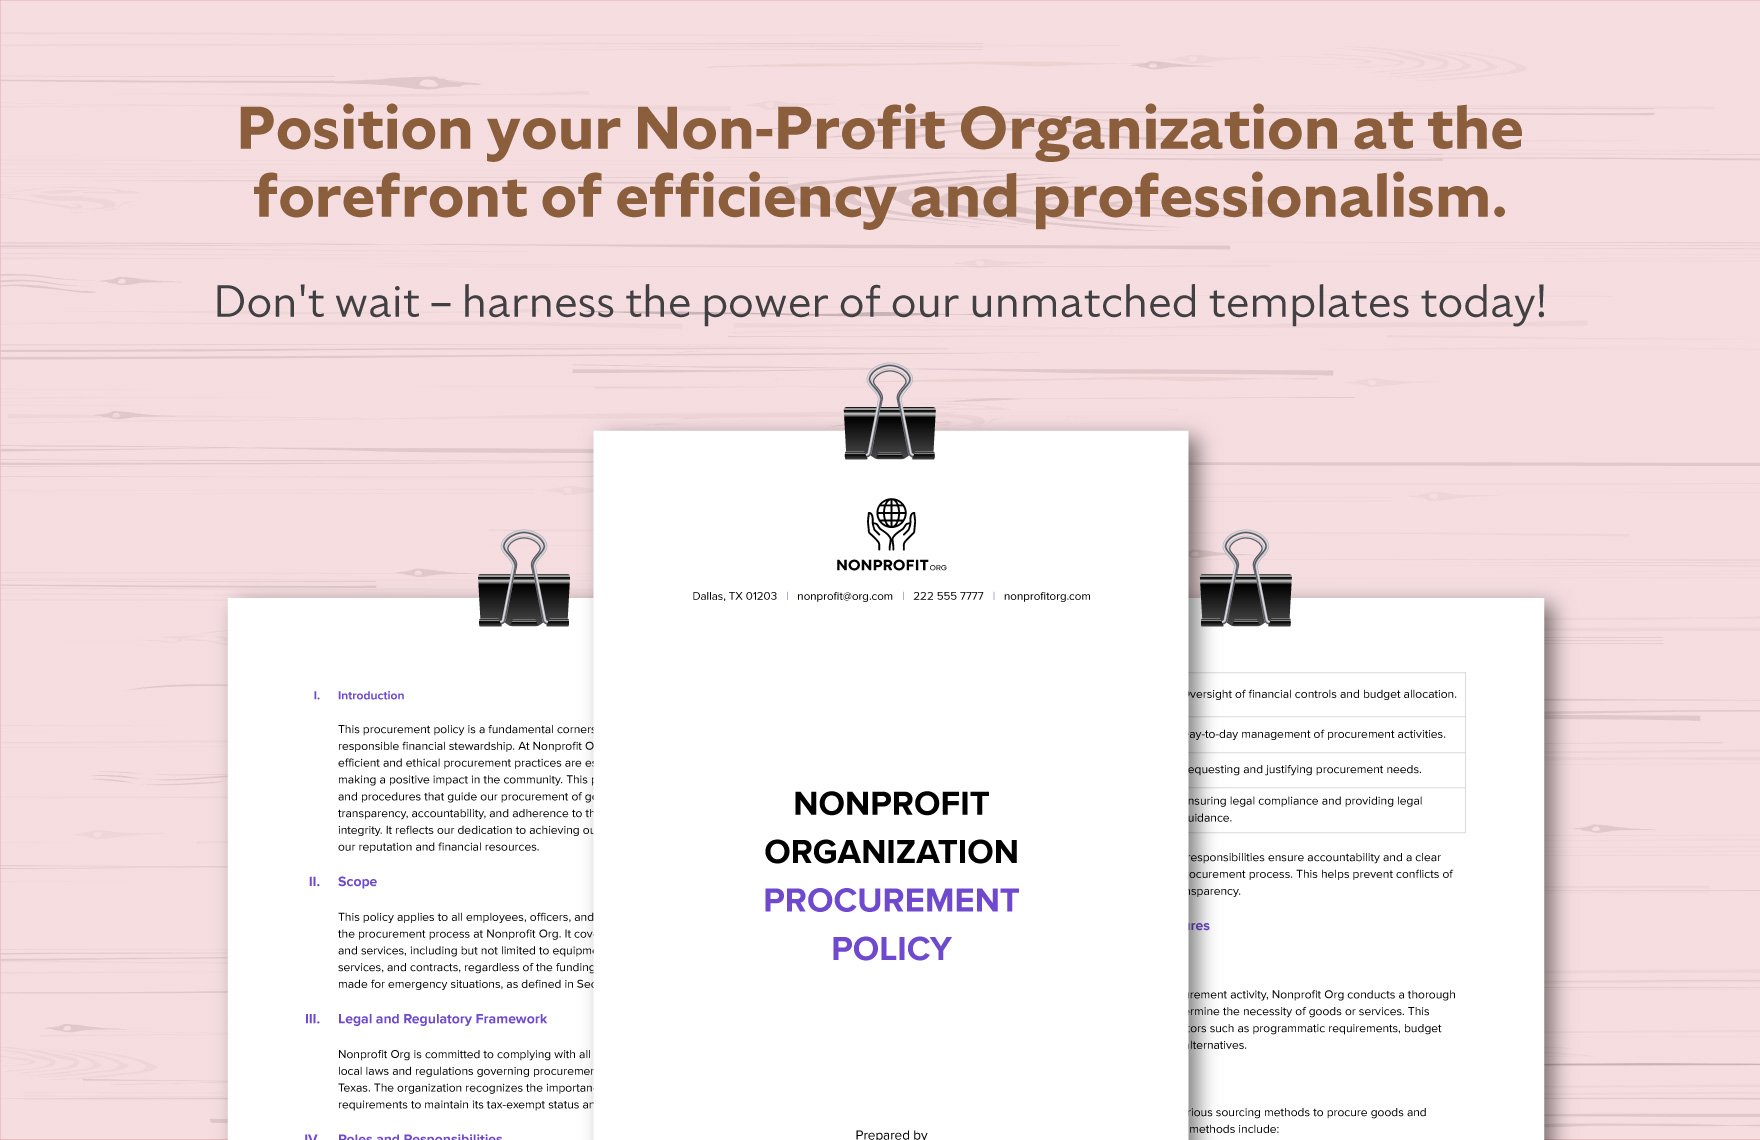 Nonprofit Organization Procurement Policy Template